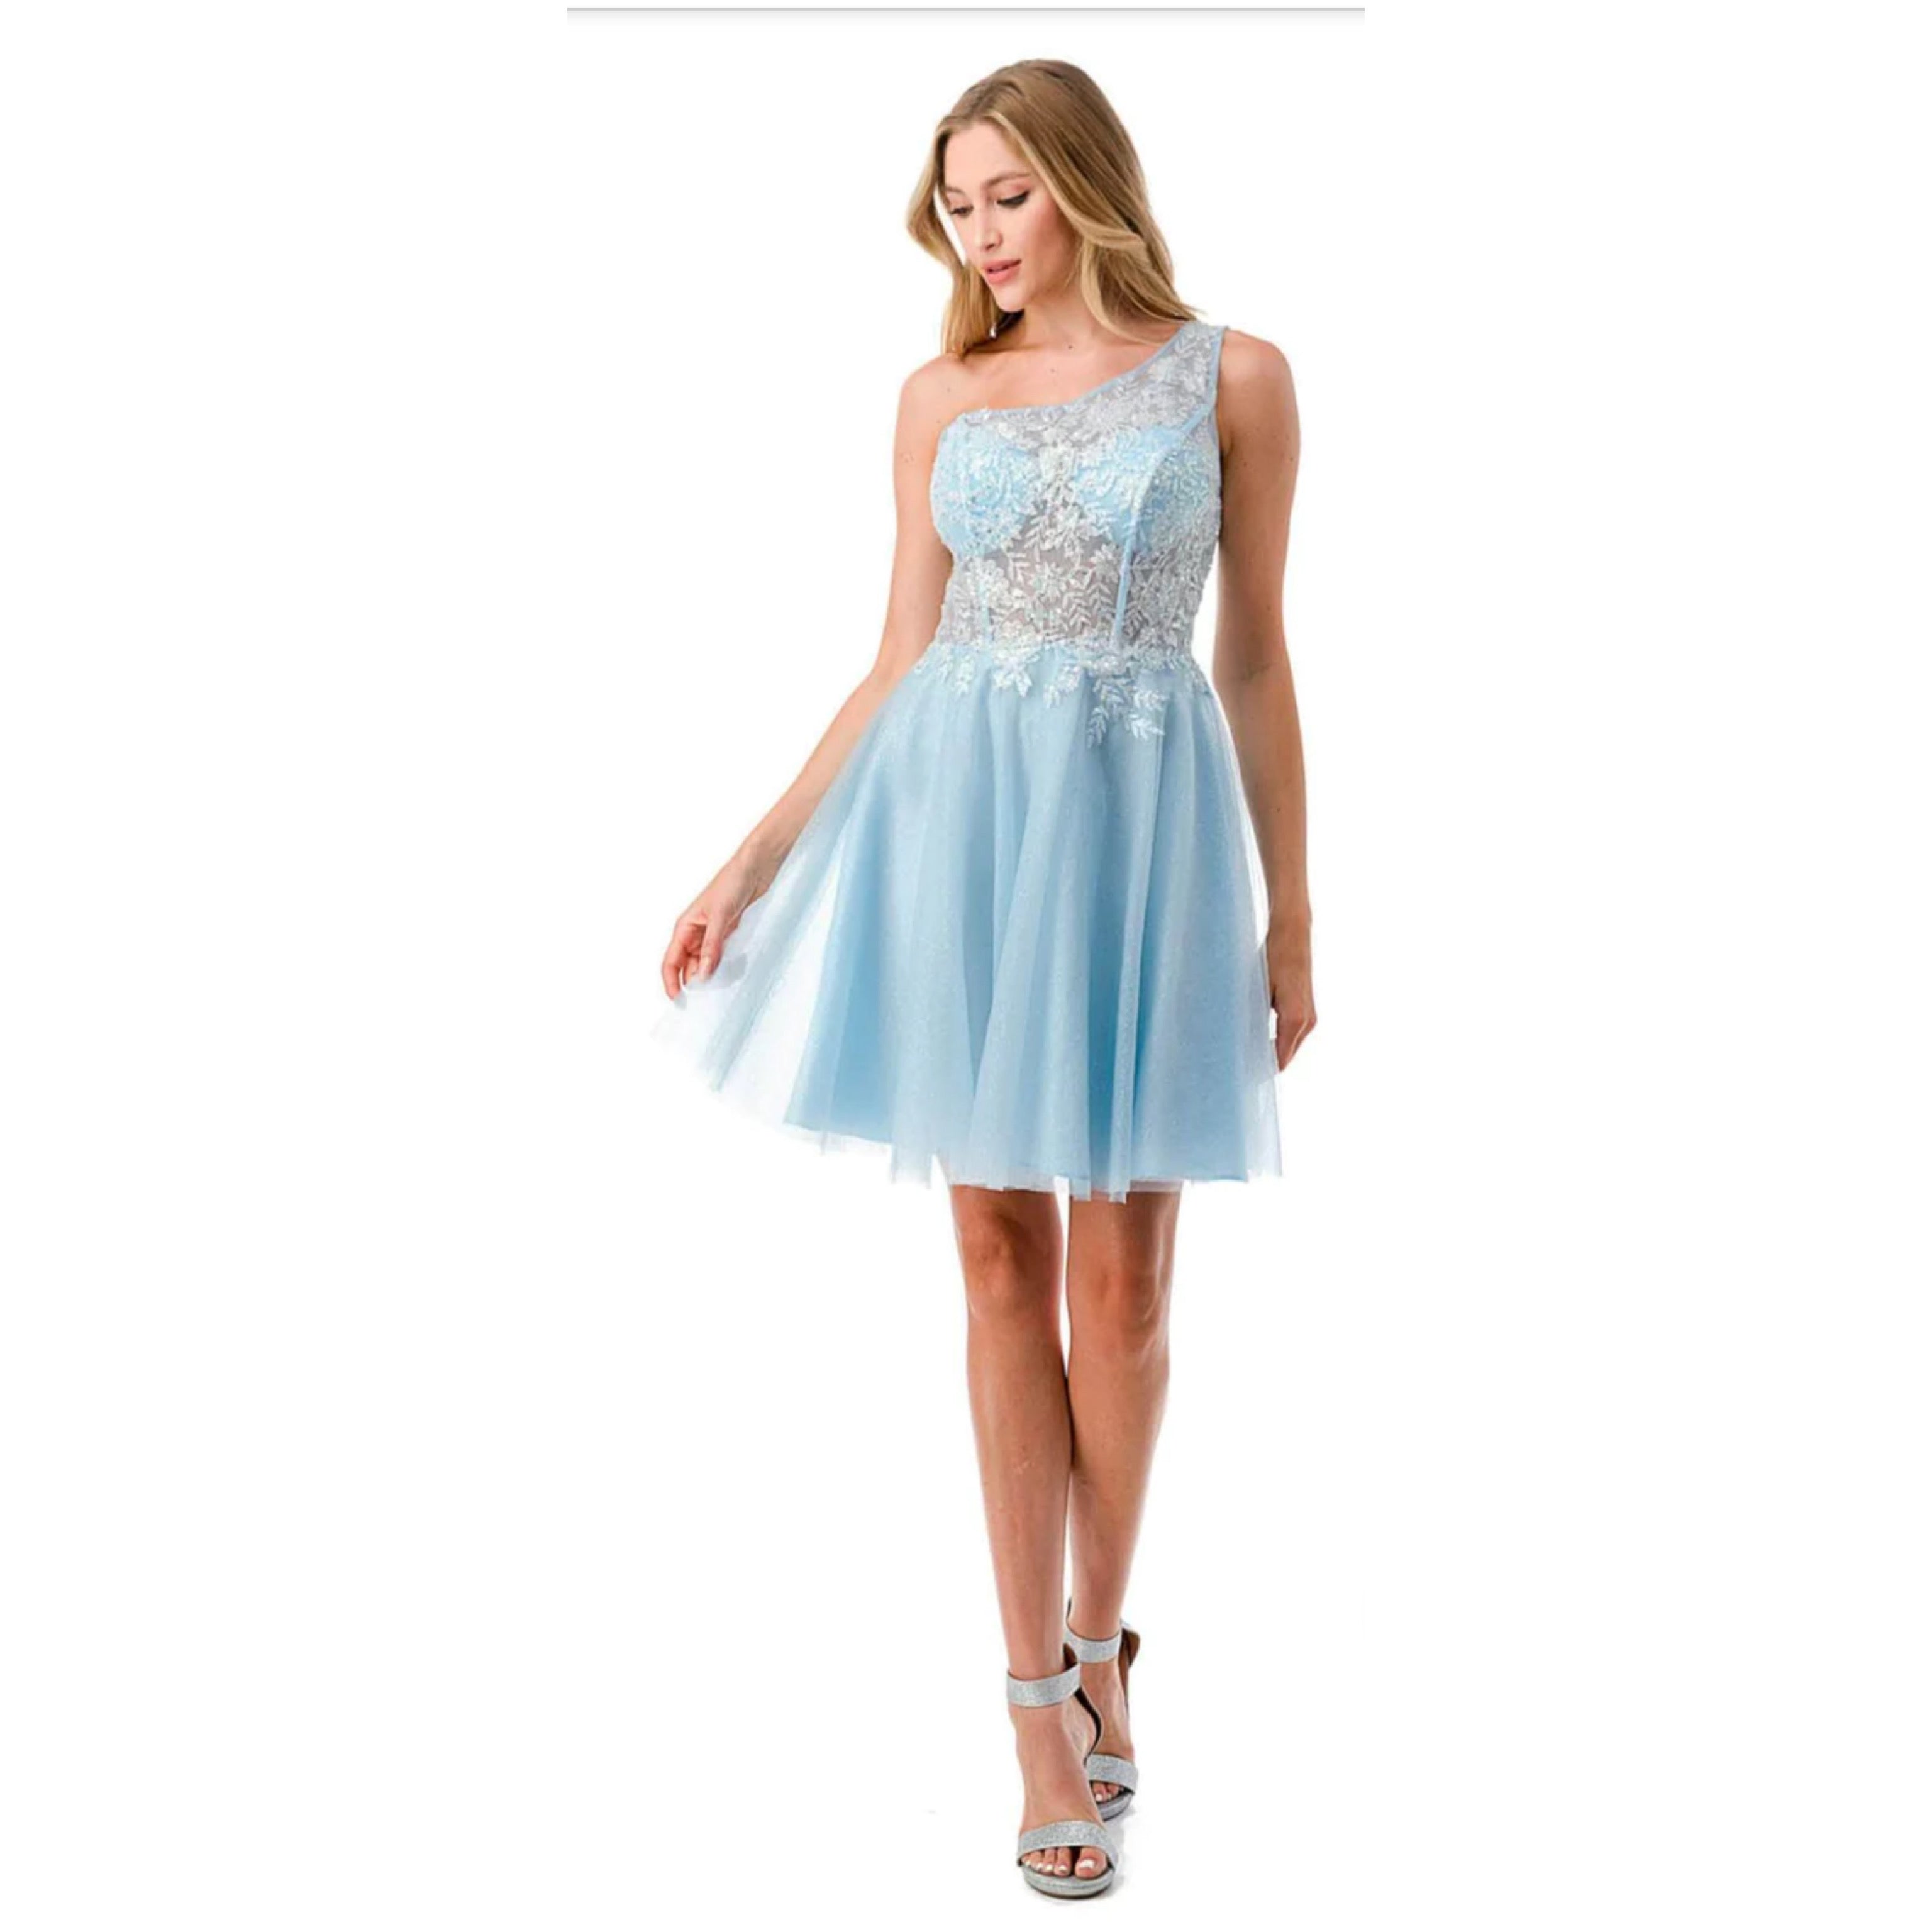 Coya pale blue dress, size M